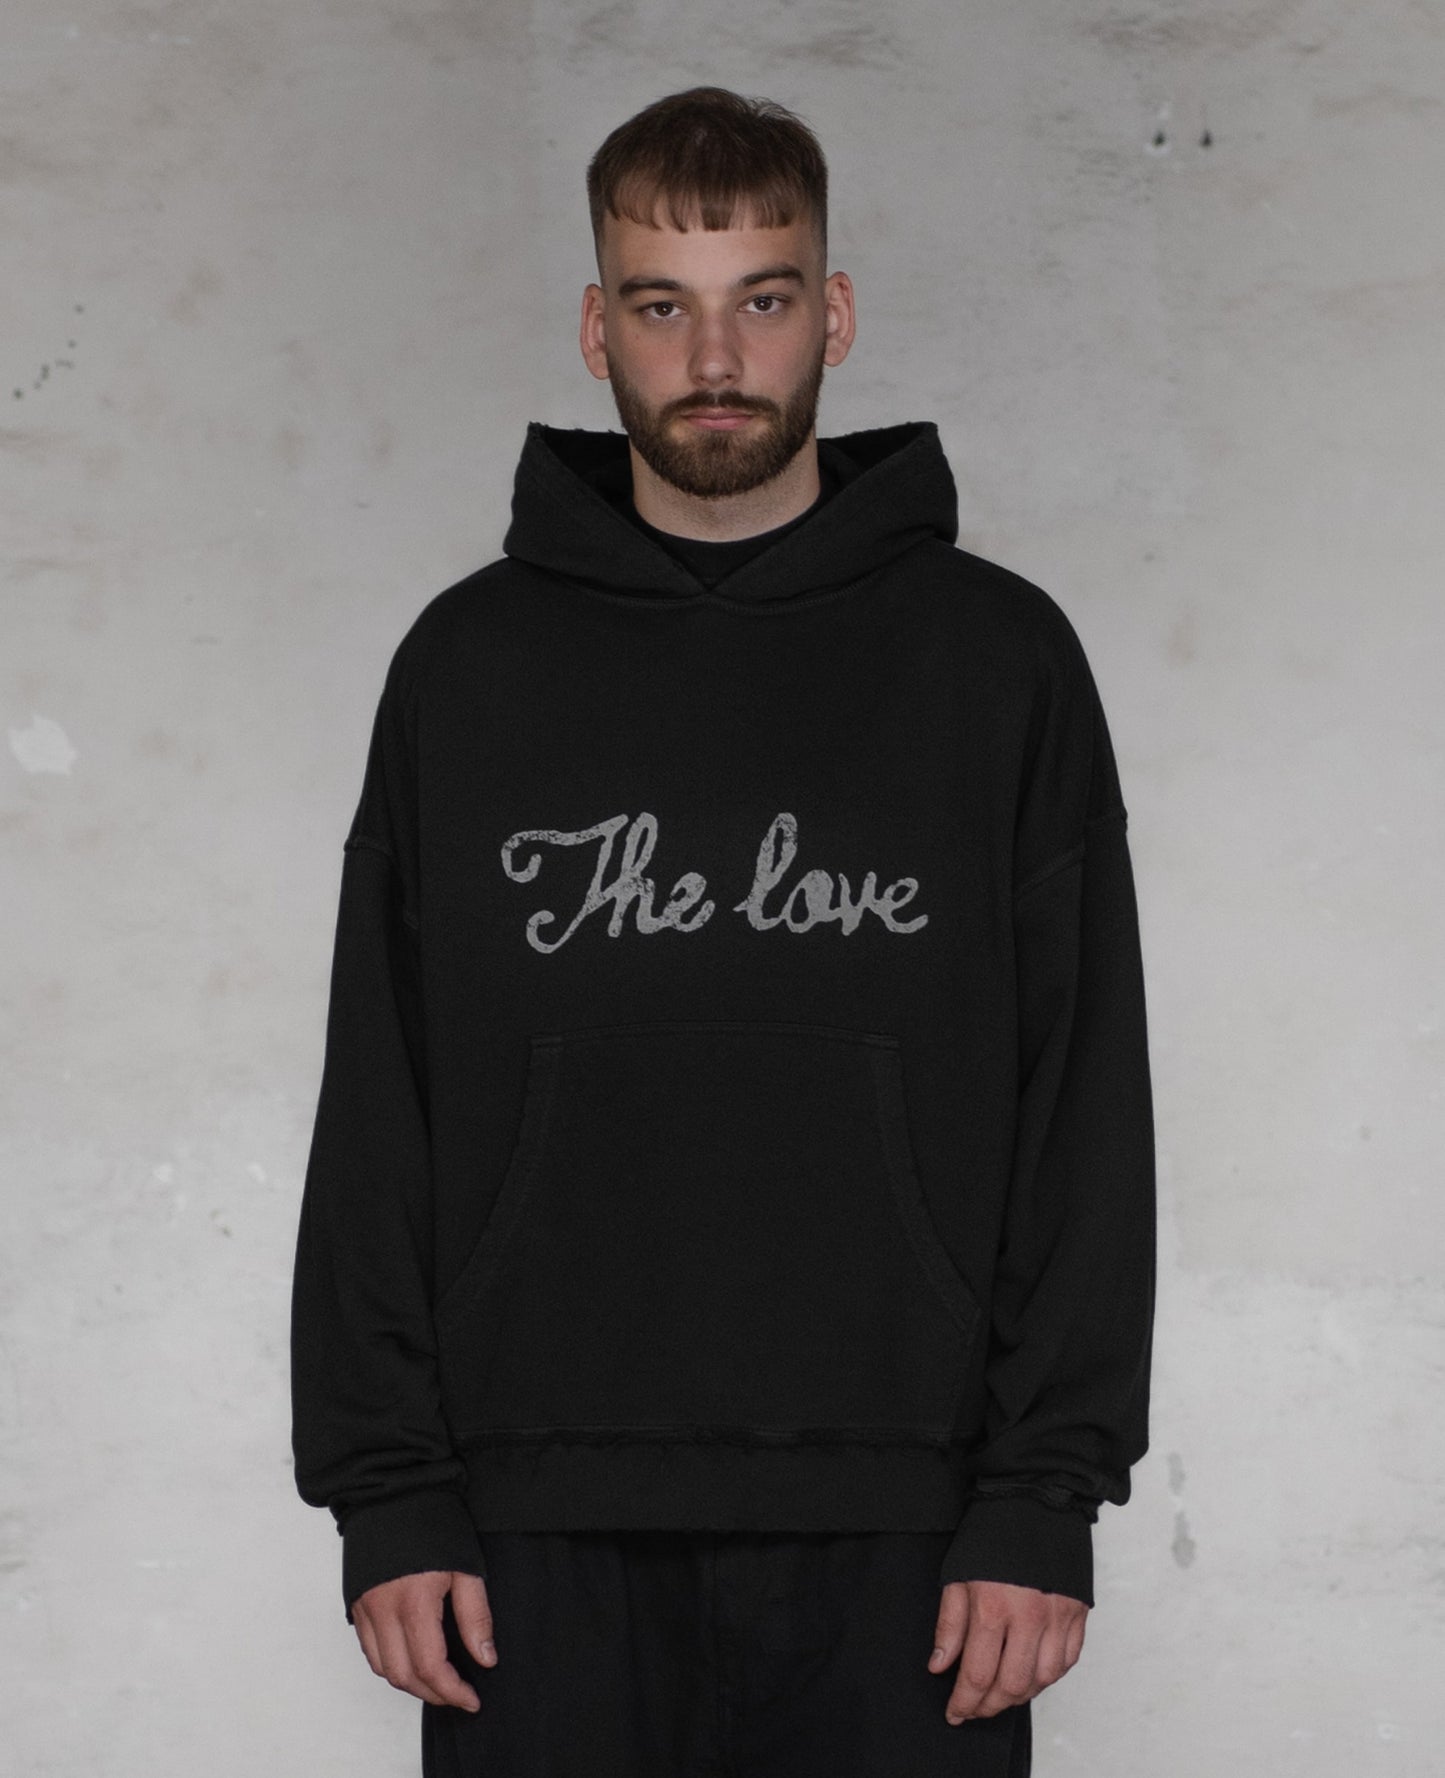 The love hoodie